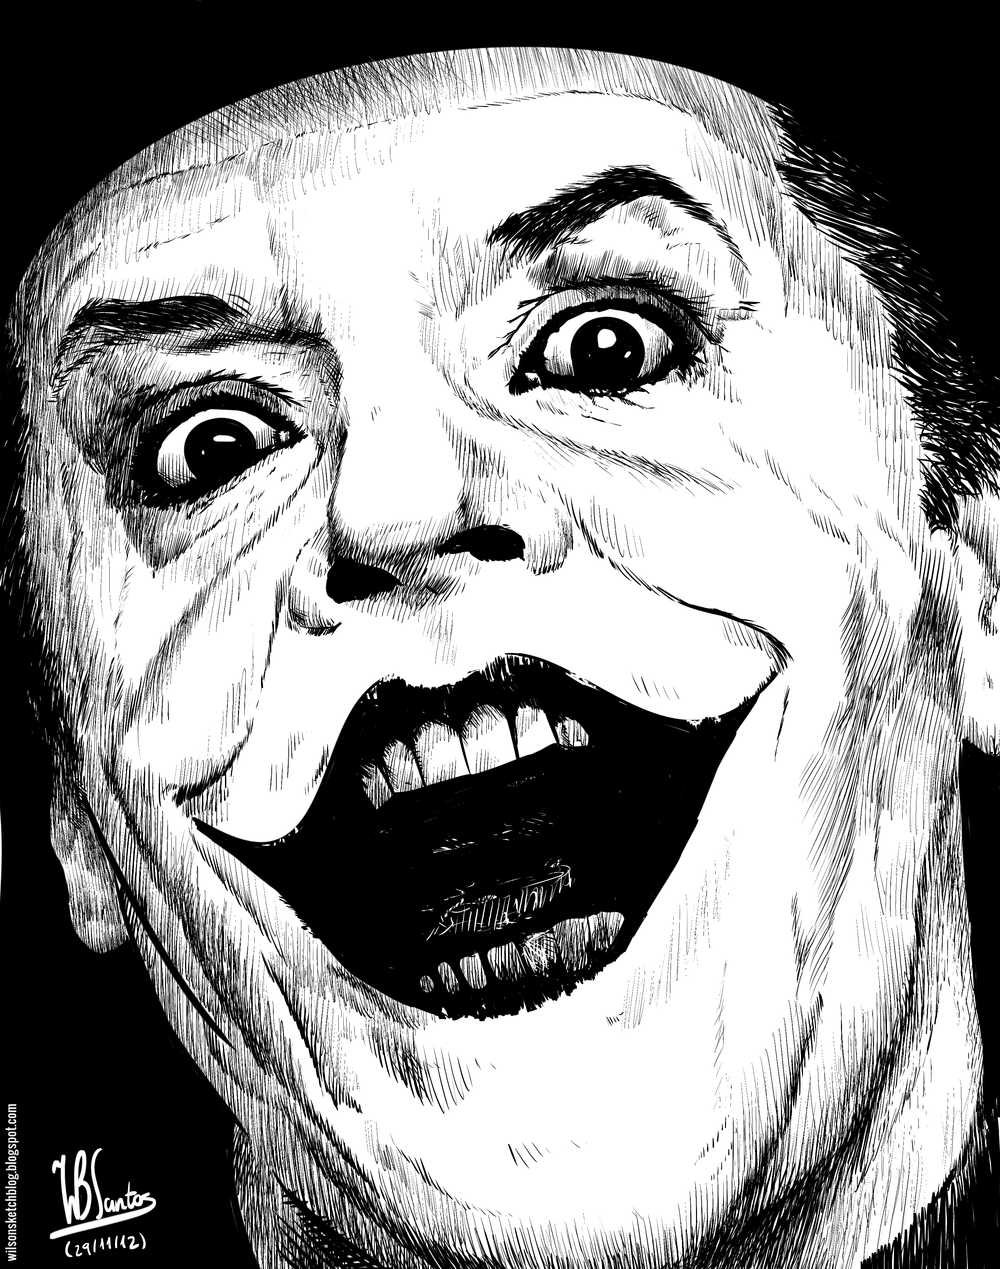 Jack Nicholson as Joker (Ink drawing)